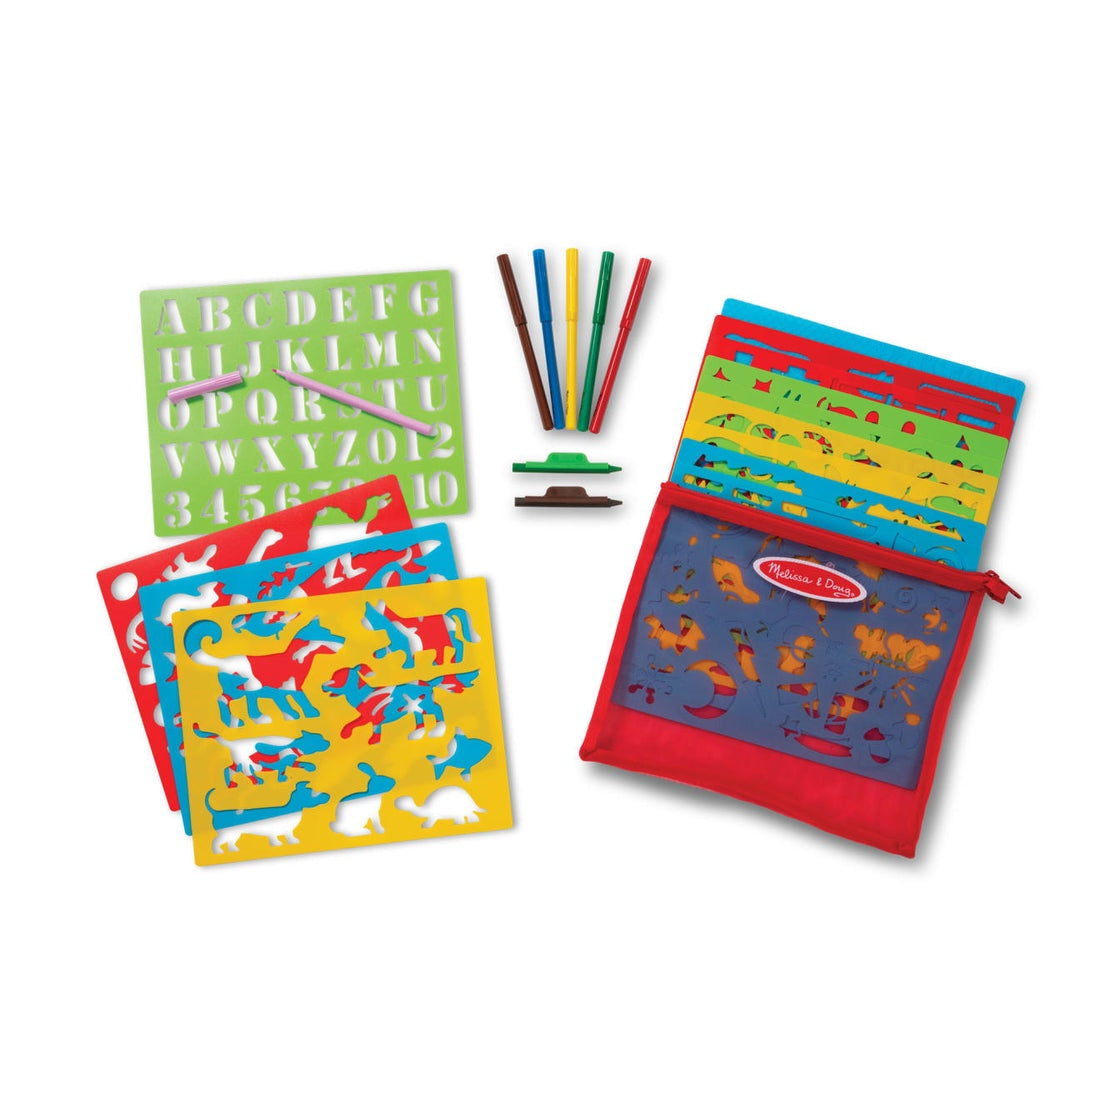 Melissa & Doug Fashion Design Art Activity Kit - 9 Double-Sided Rubbing  Plates, 4 Pencils, Crayon - Fashion Plates, Travel Toys for Kids Ages 5+,  16